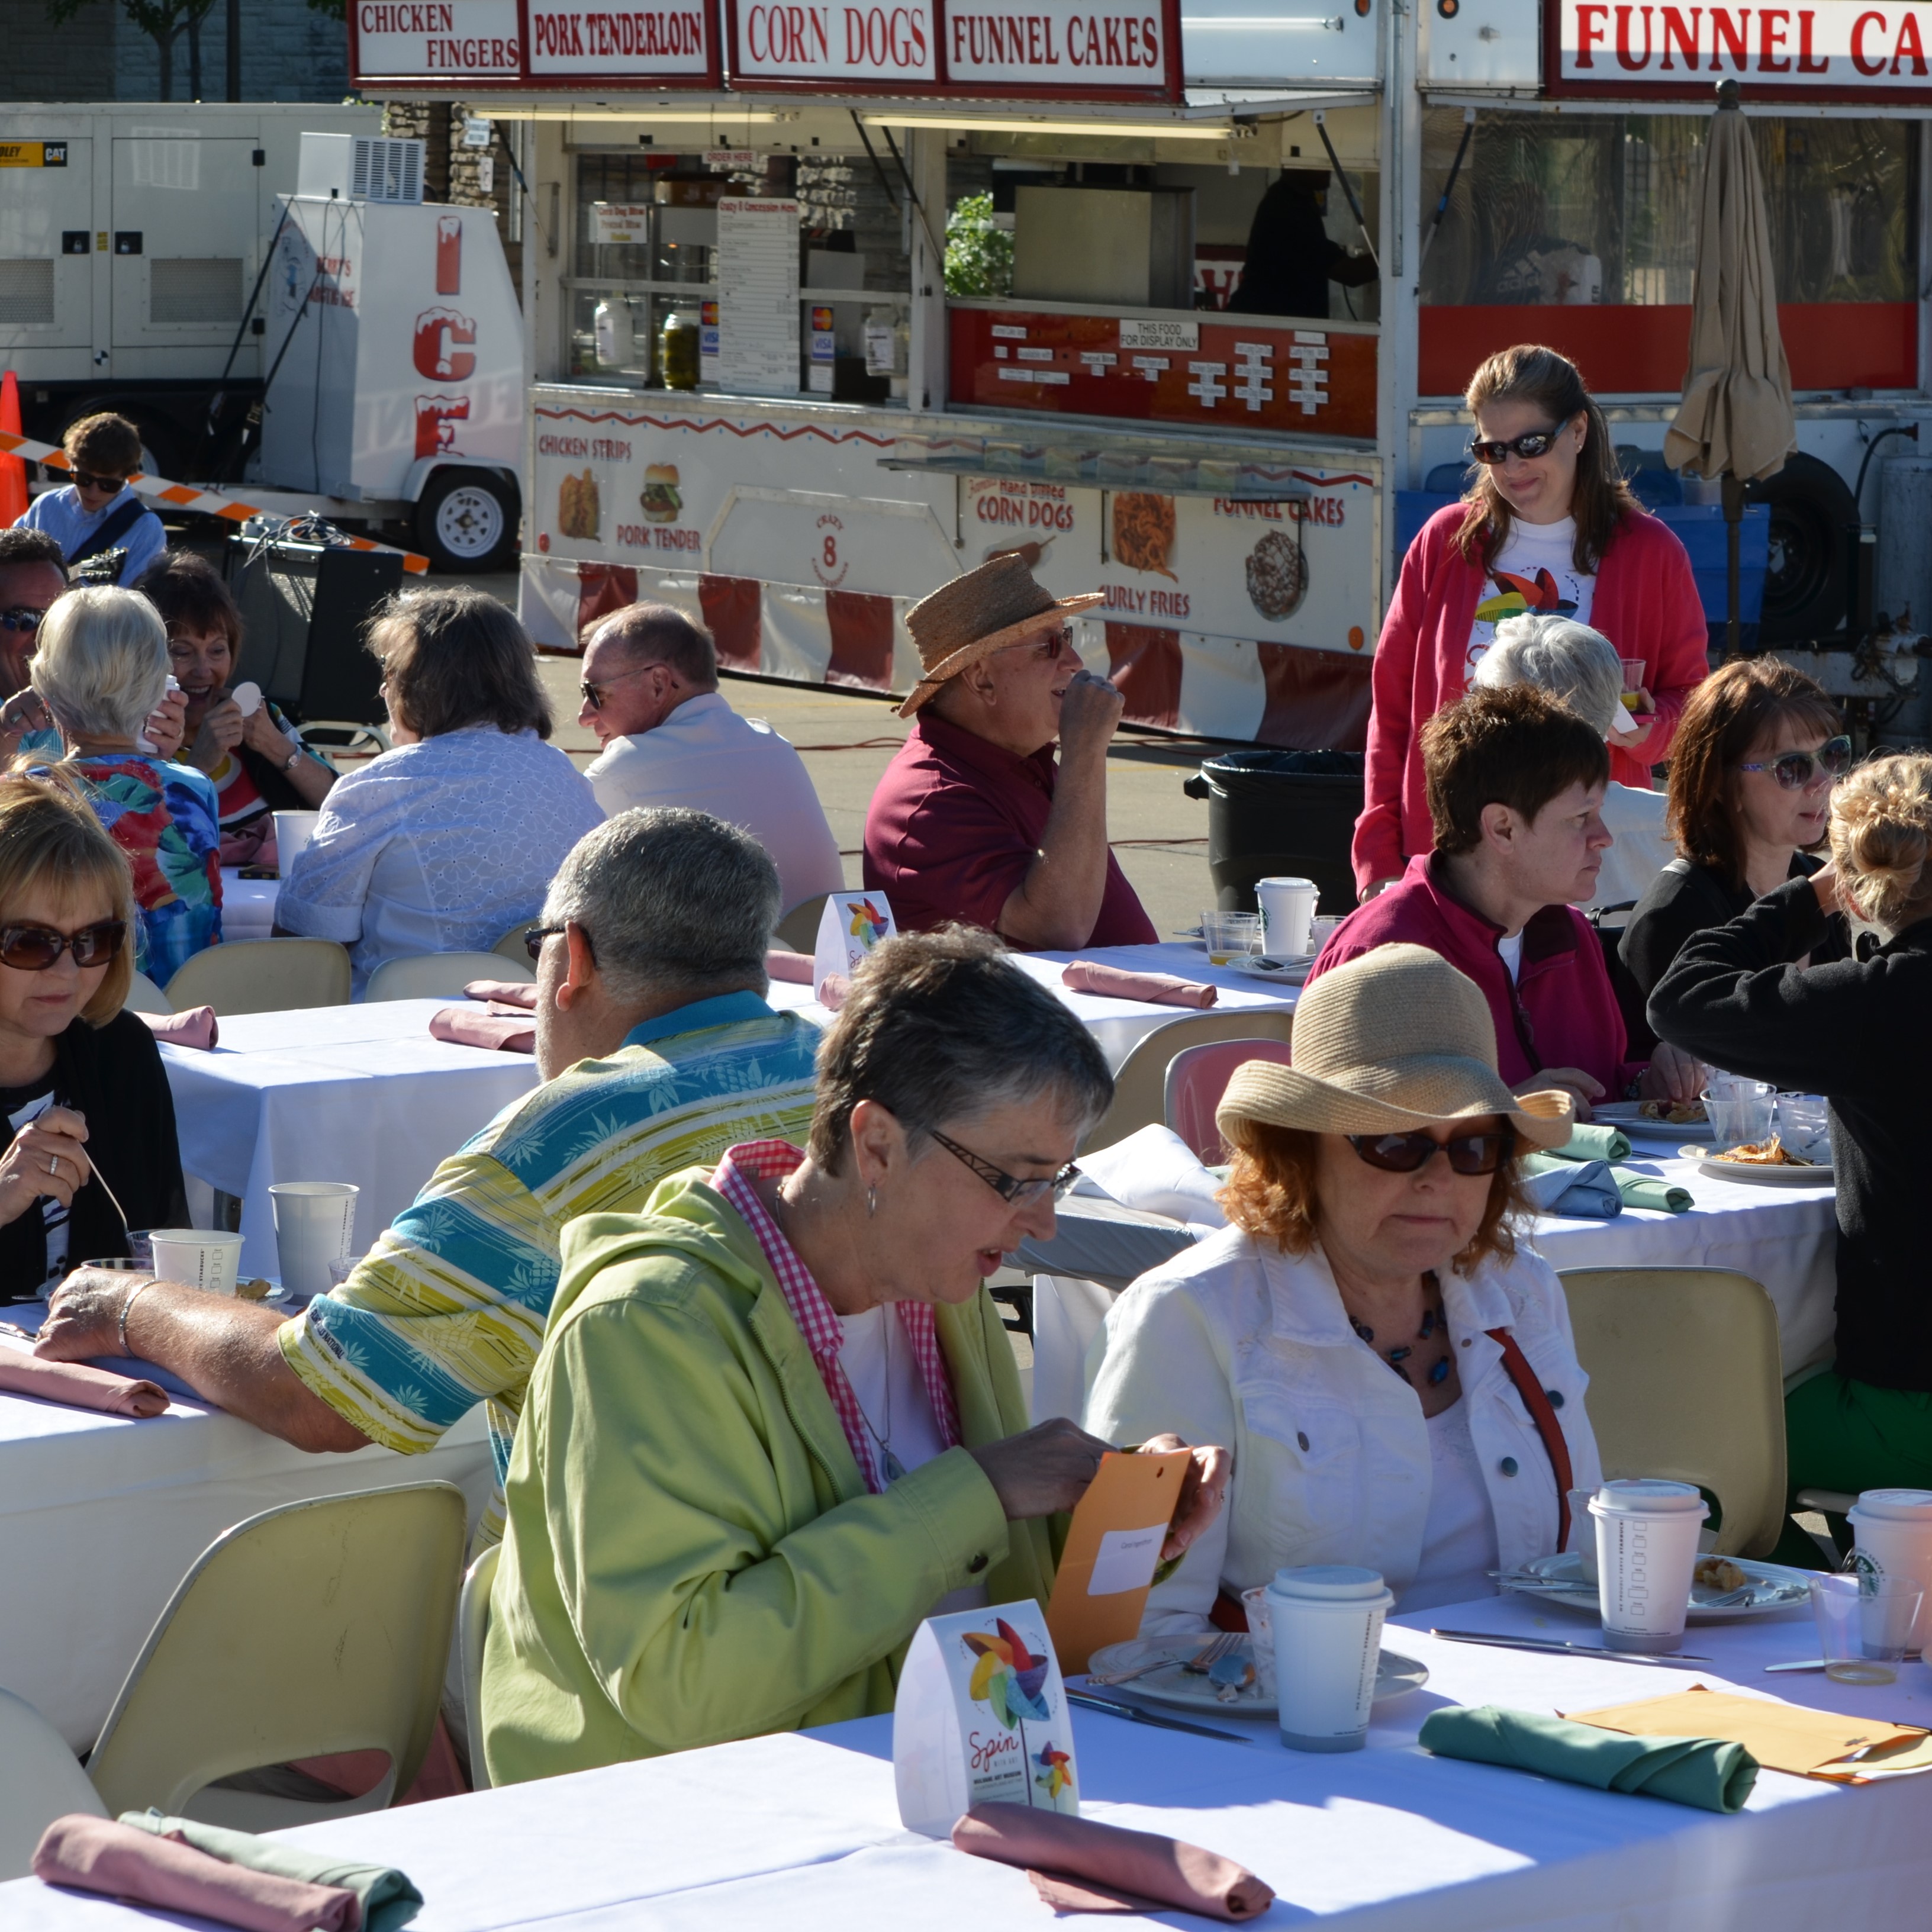 People eating at Art Fair next to food trucks